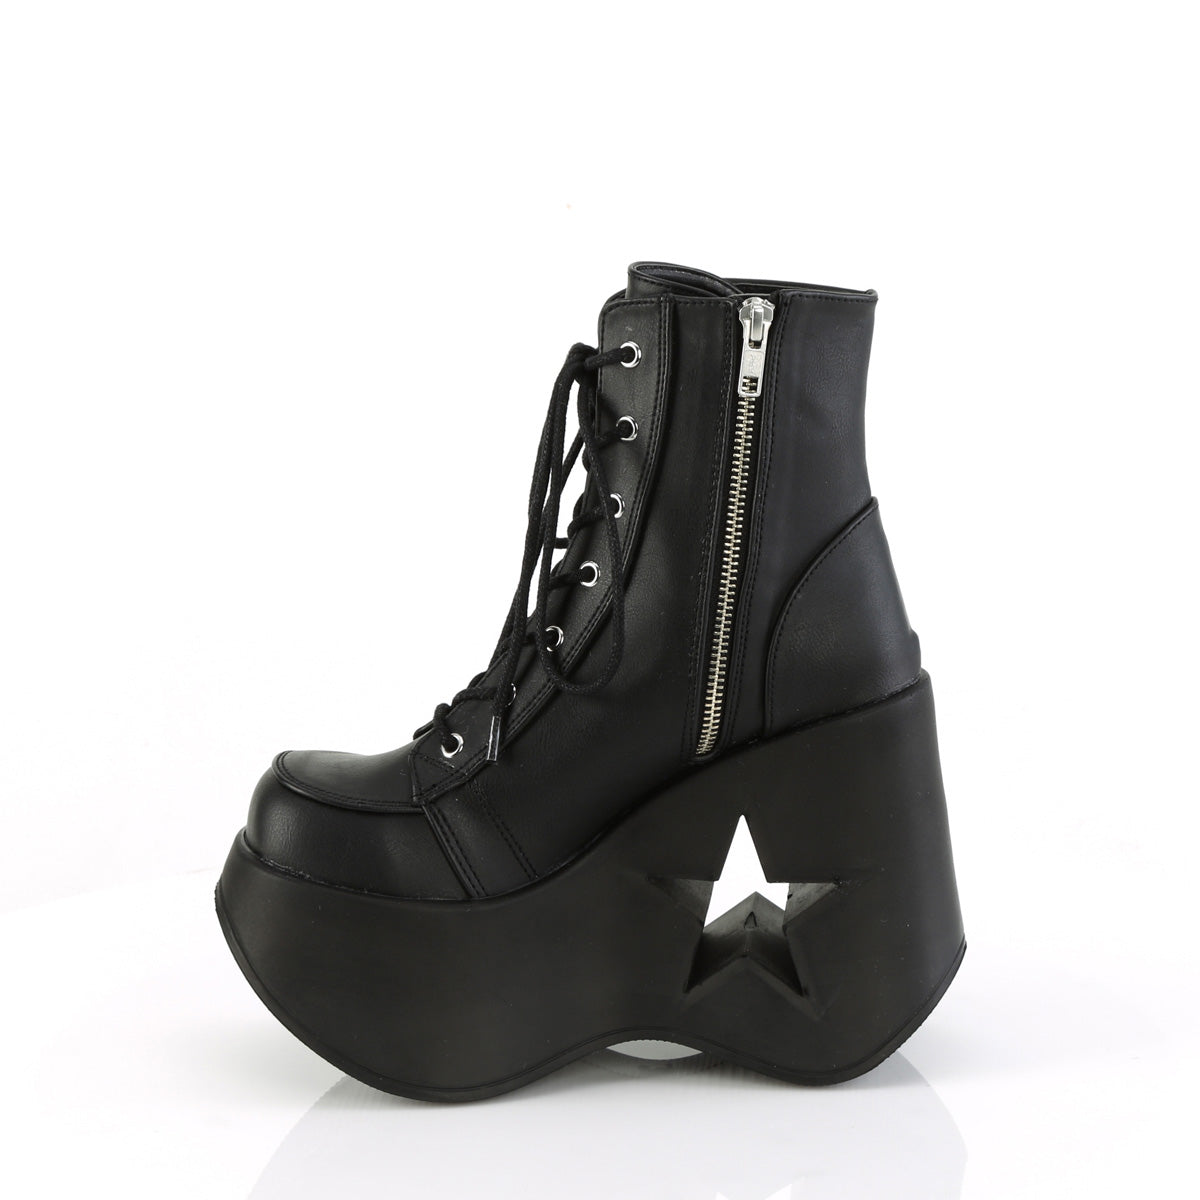 DYNAMITE-106 Demonia Black Vegan Leather Women's Ankle Boots [Demonia Cult Alternative Footwear]